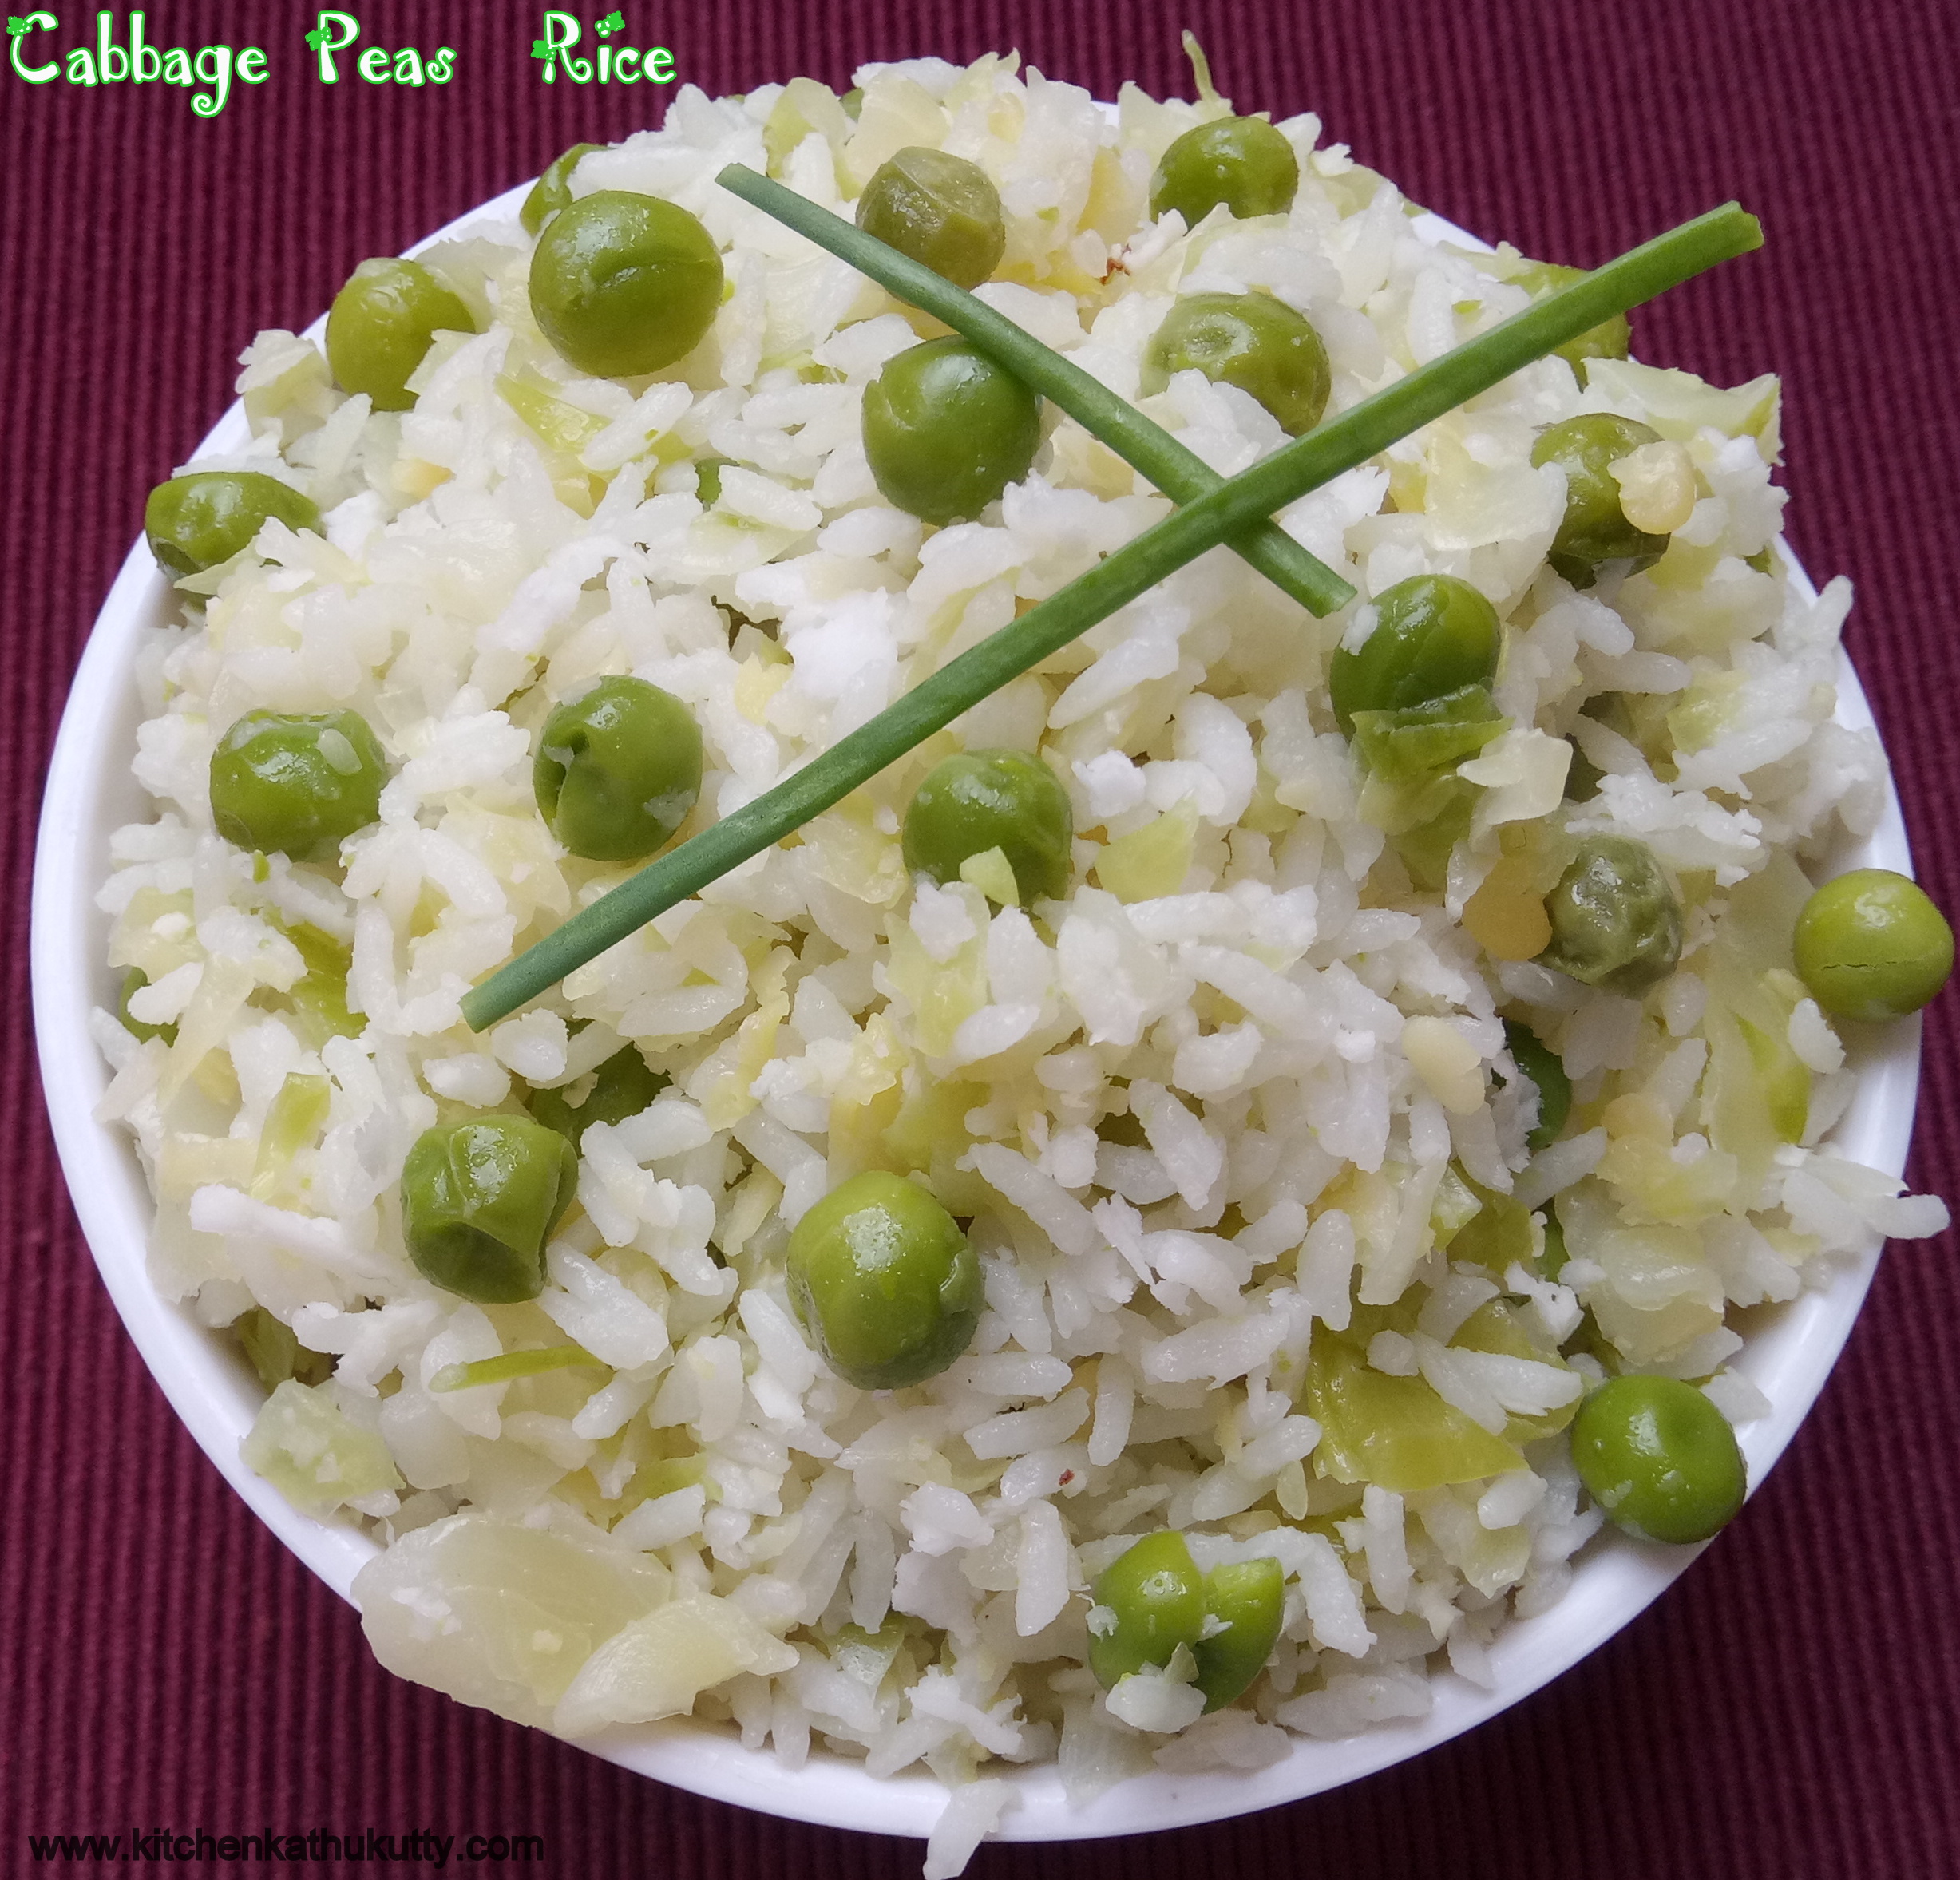 Cabbage peas rice